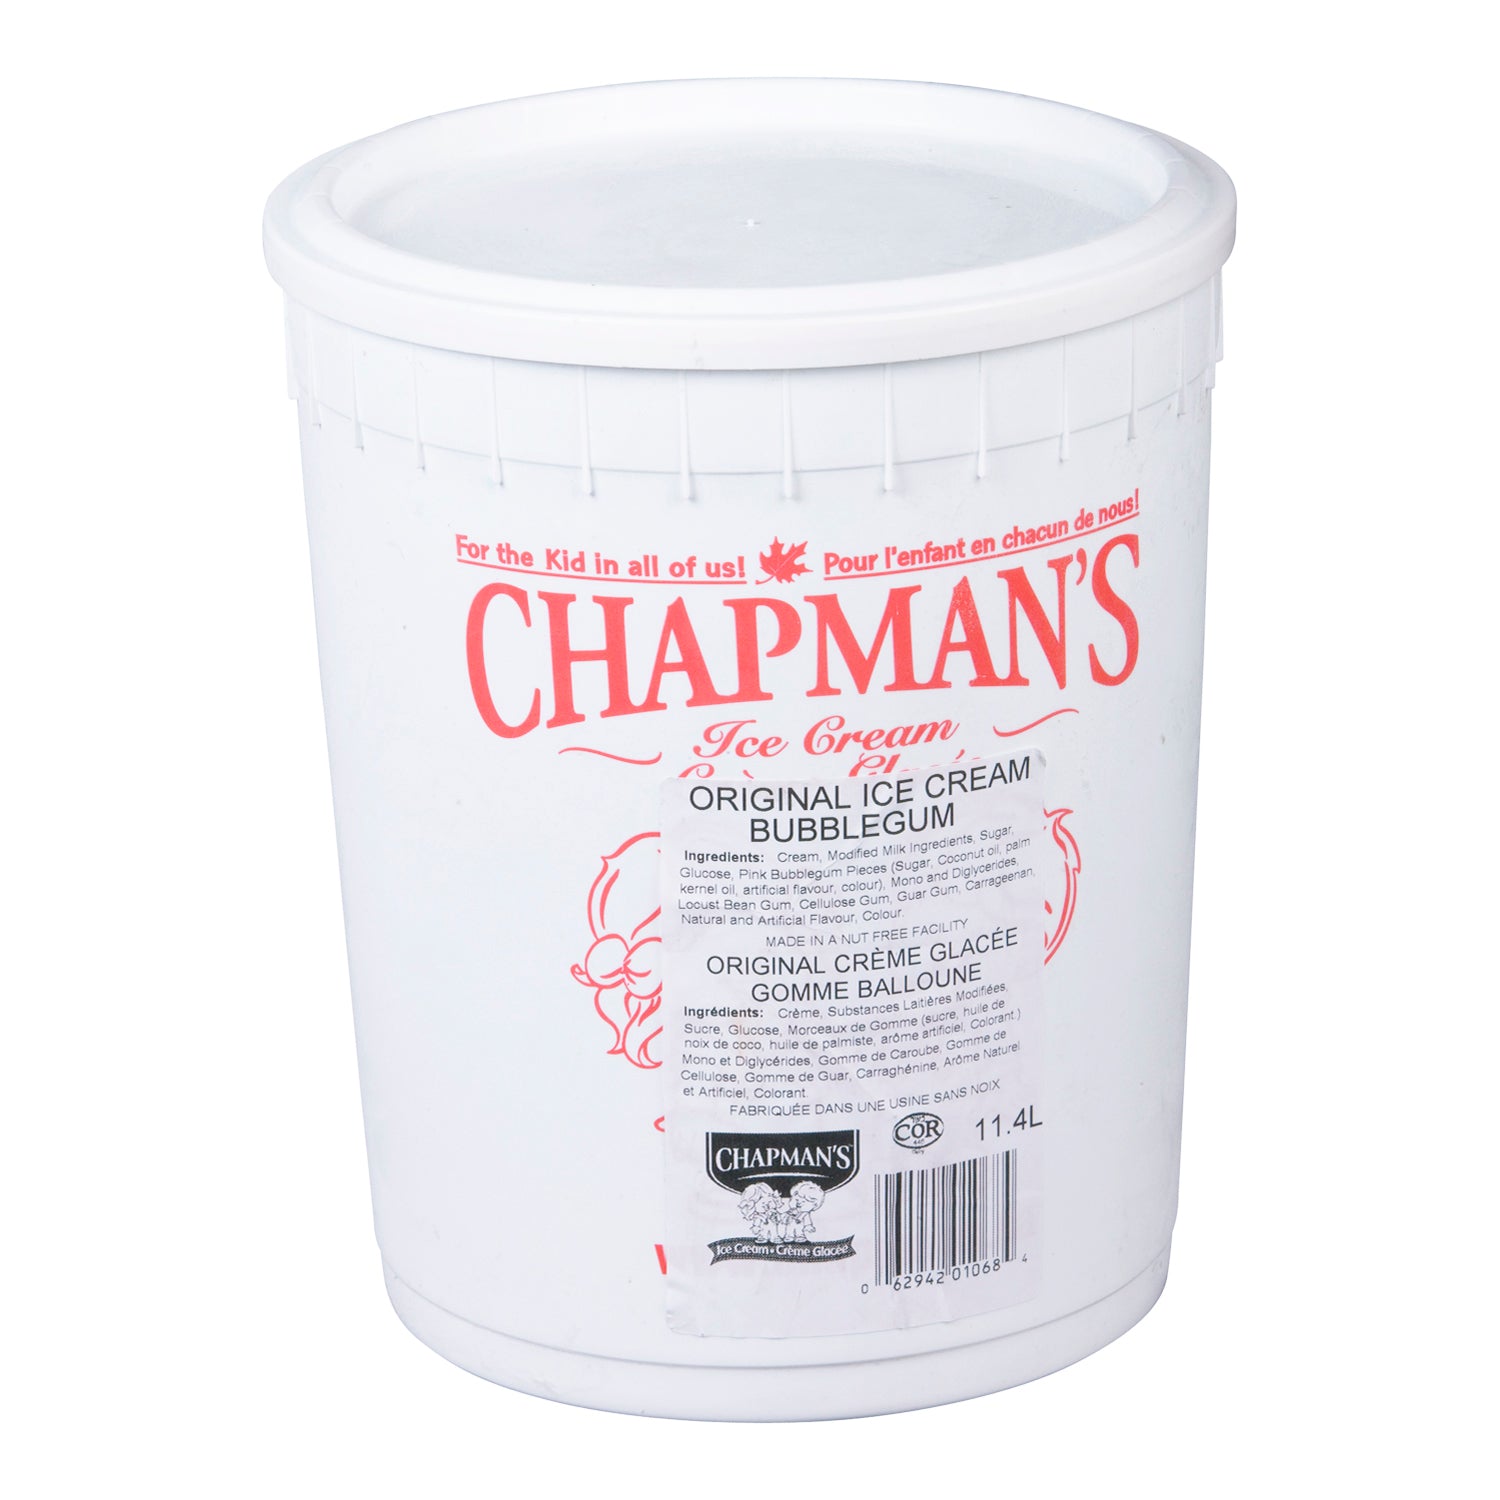 Chapman's Original Bubble Gum Ice Cream 11.4l [$0.49/serving]